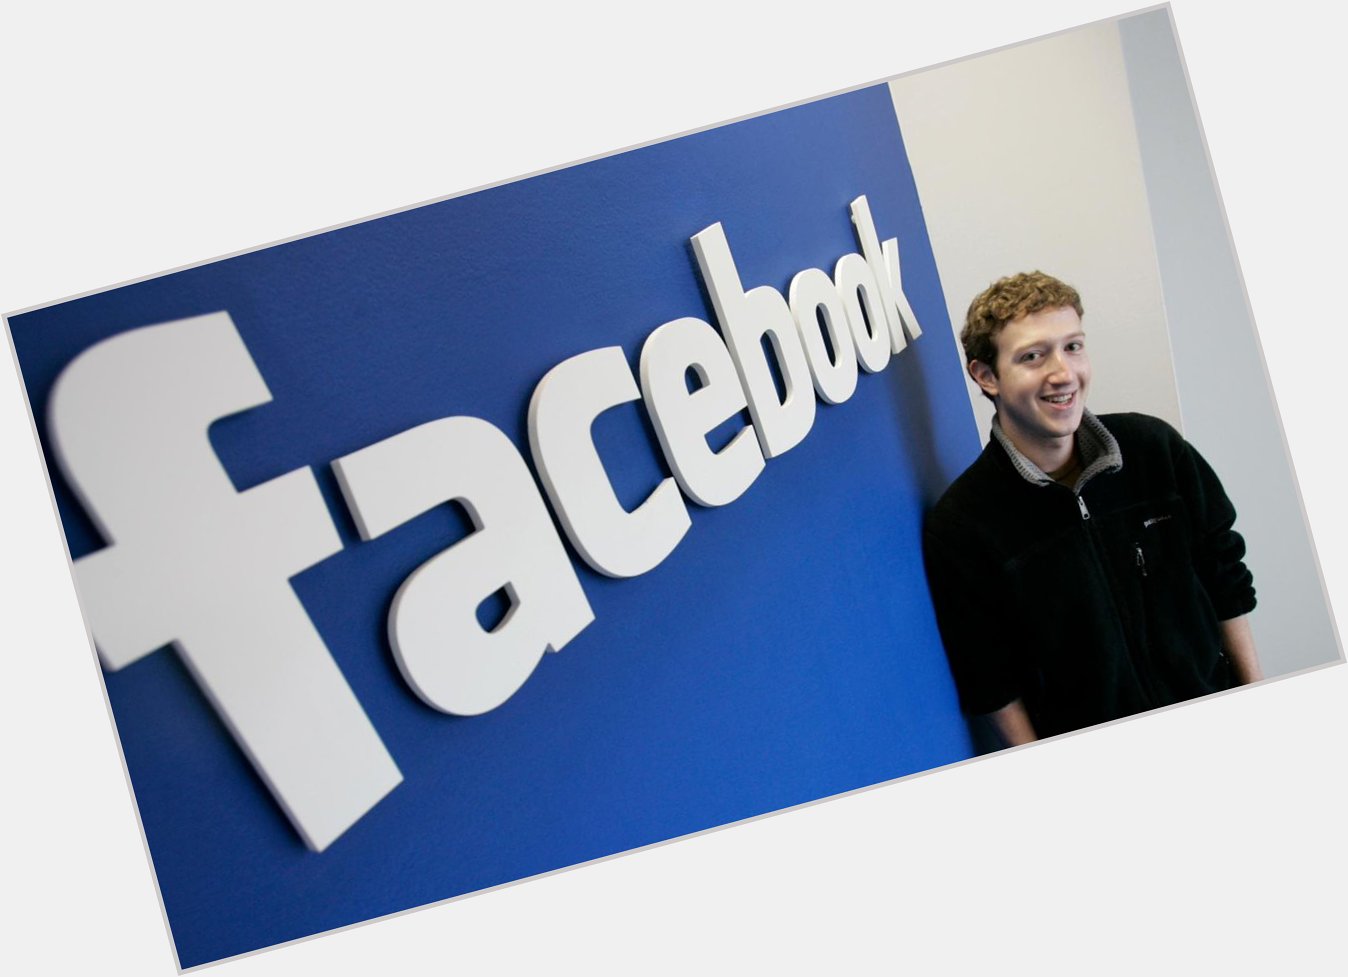 Happy birthday to Facebook co-founder Mark Zuckerberg. 